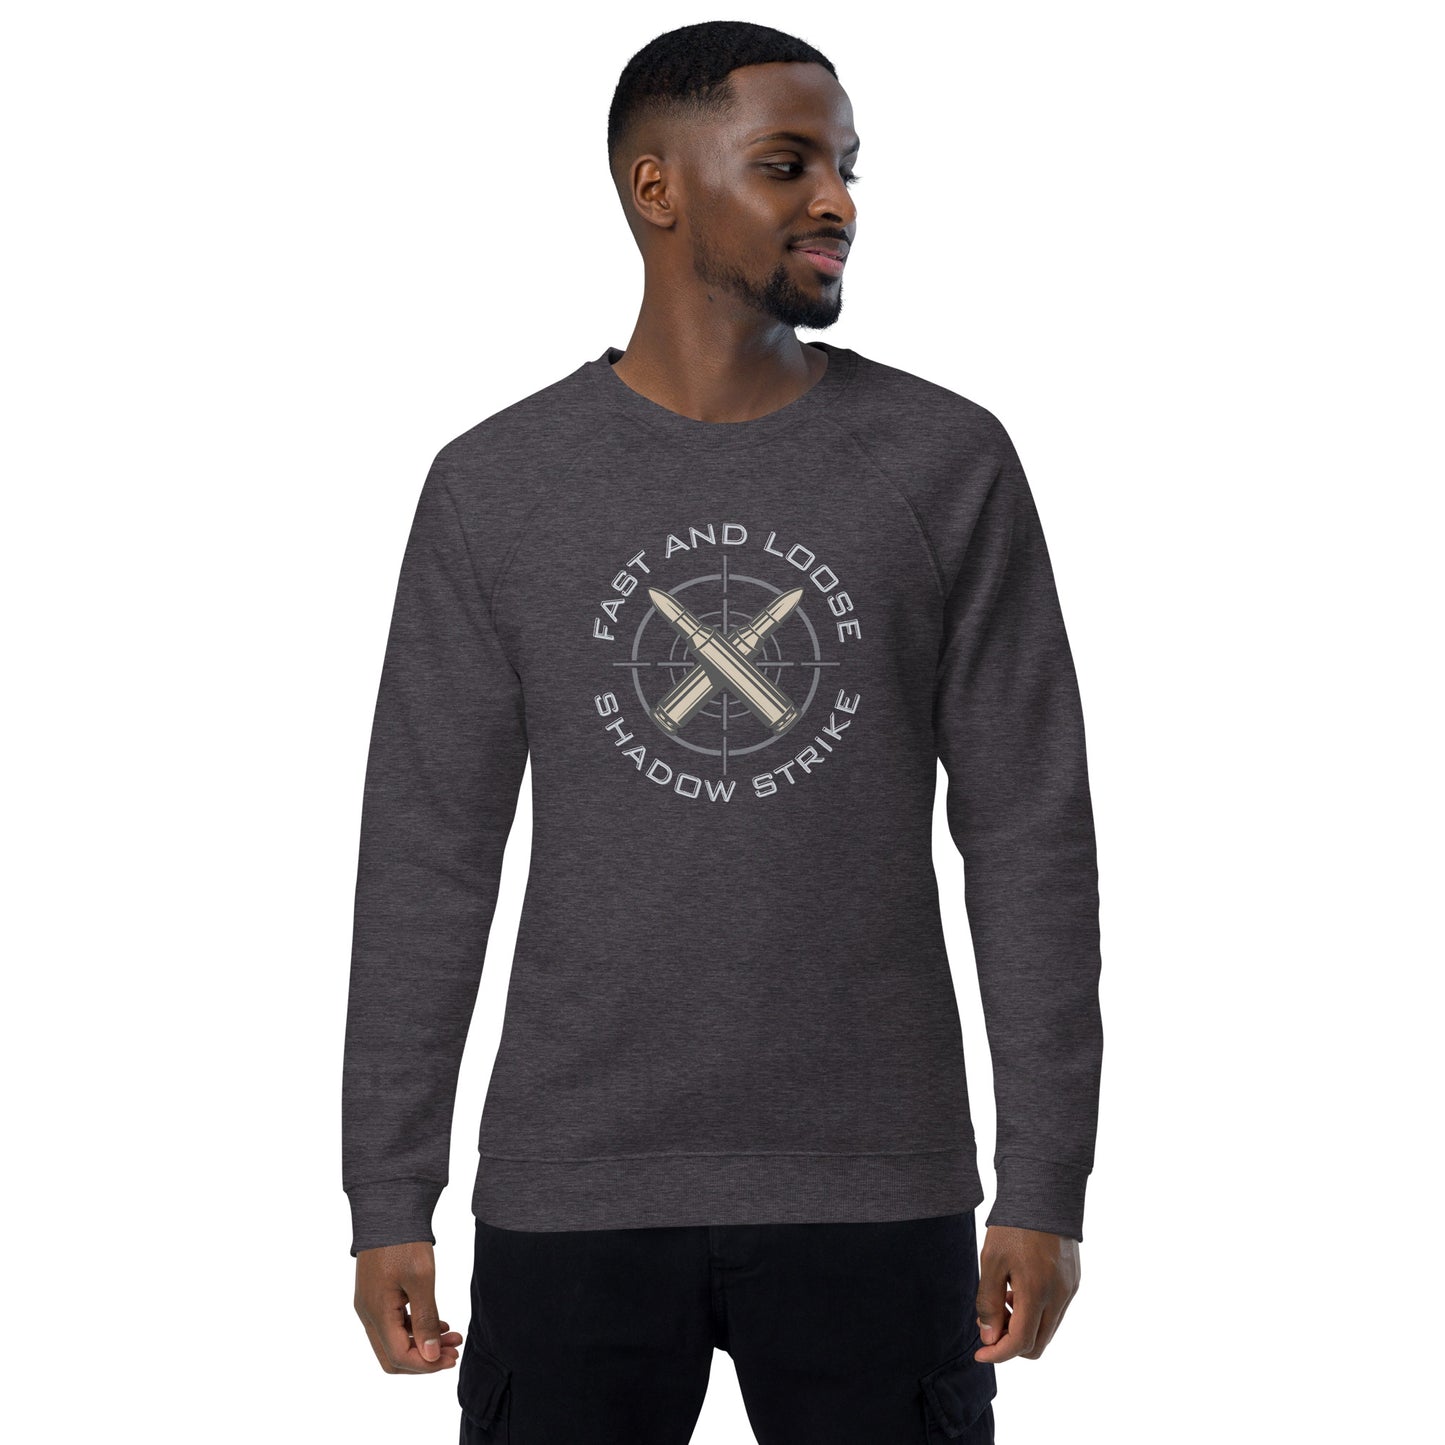 Fast and Loose | Unisex organic raglan sweatshirt